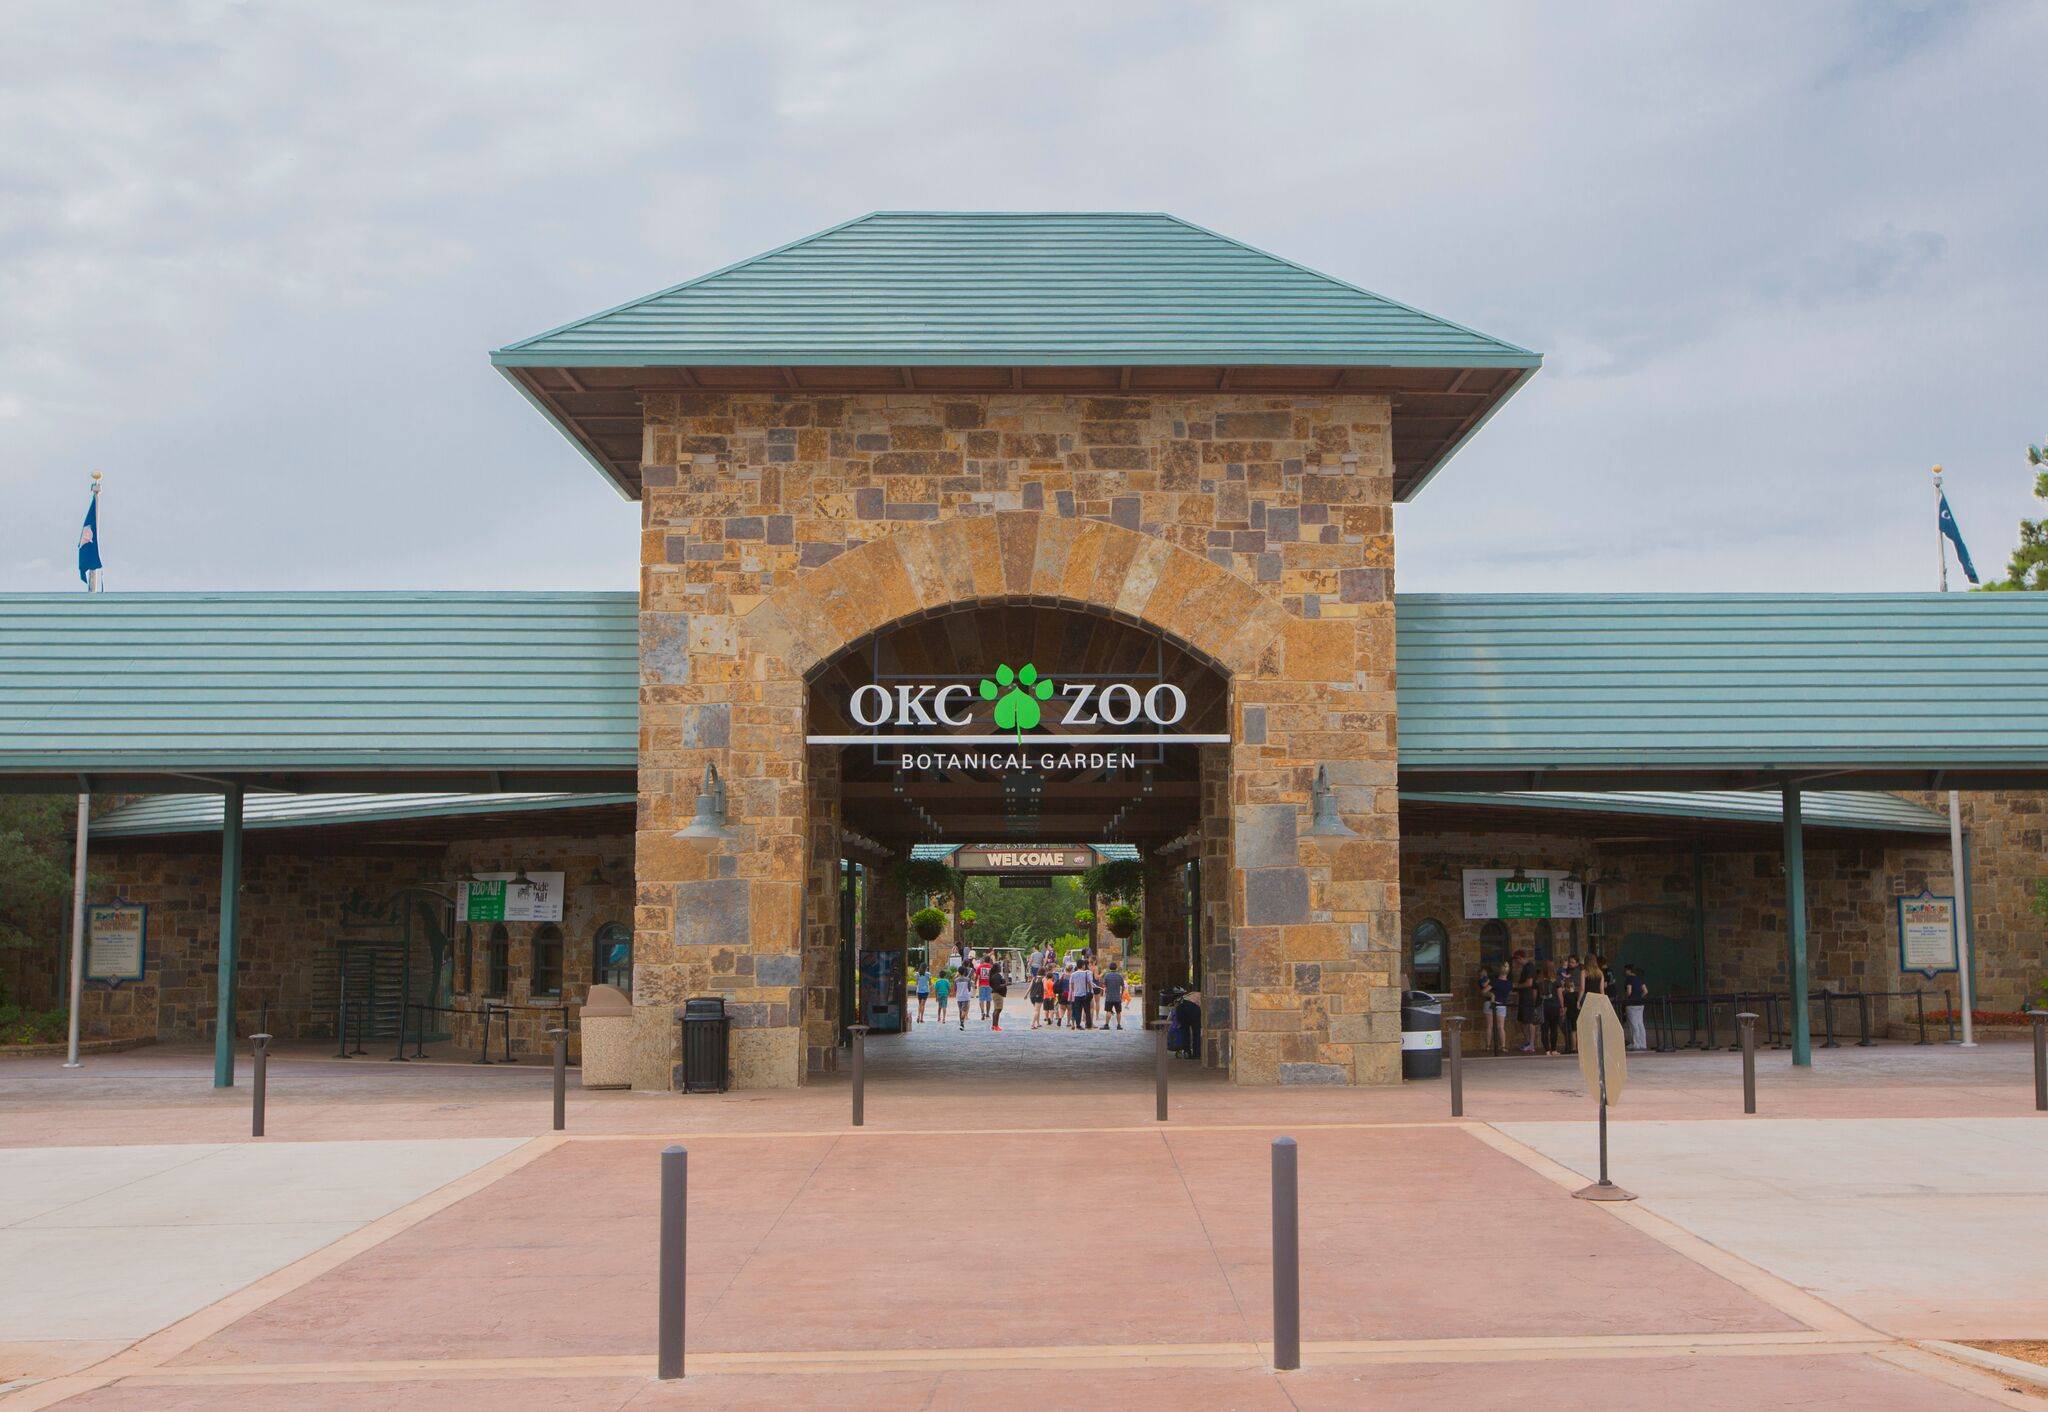 19-astonishing-facts-about-oklahoma-city-zoo